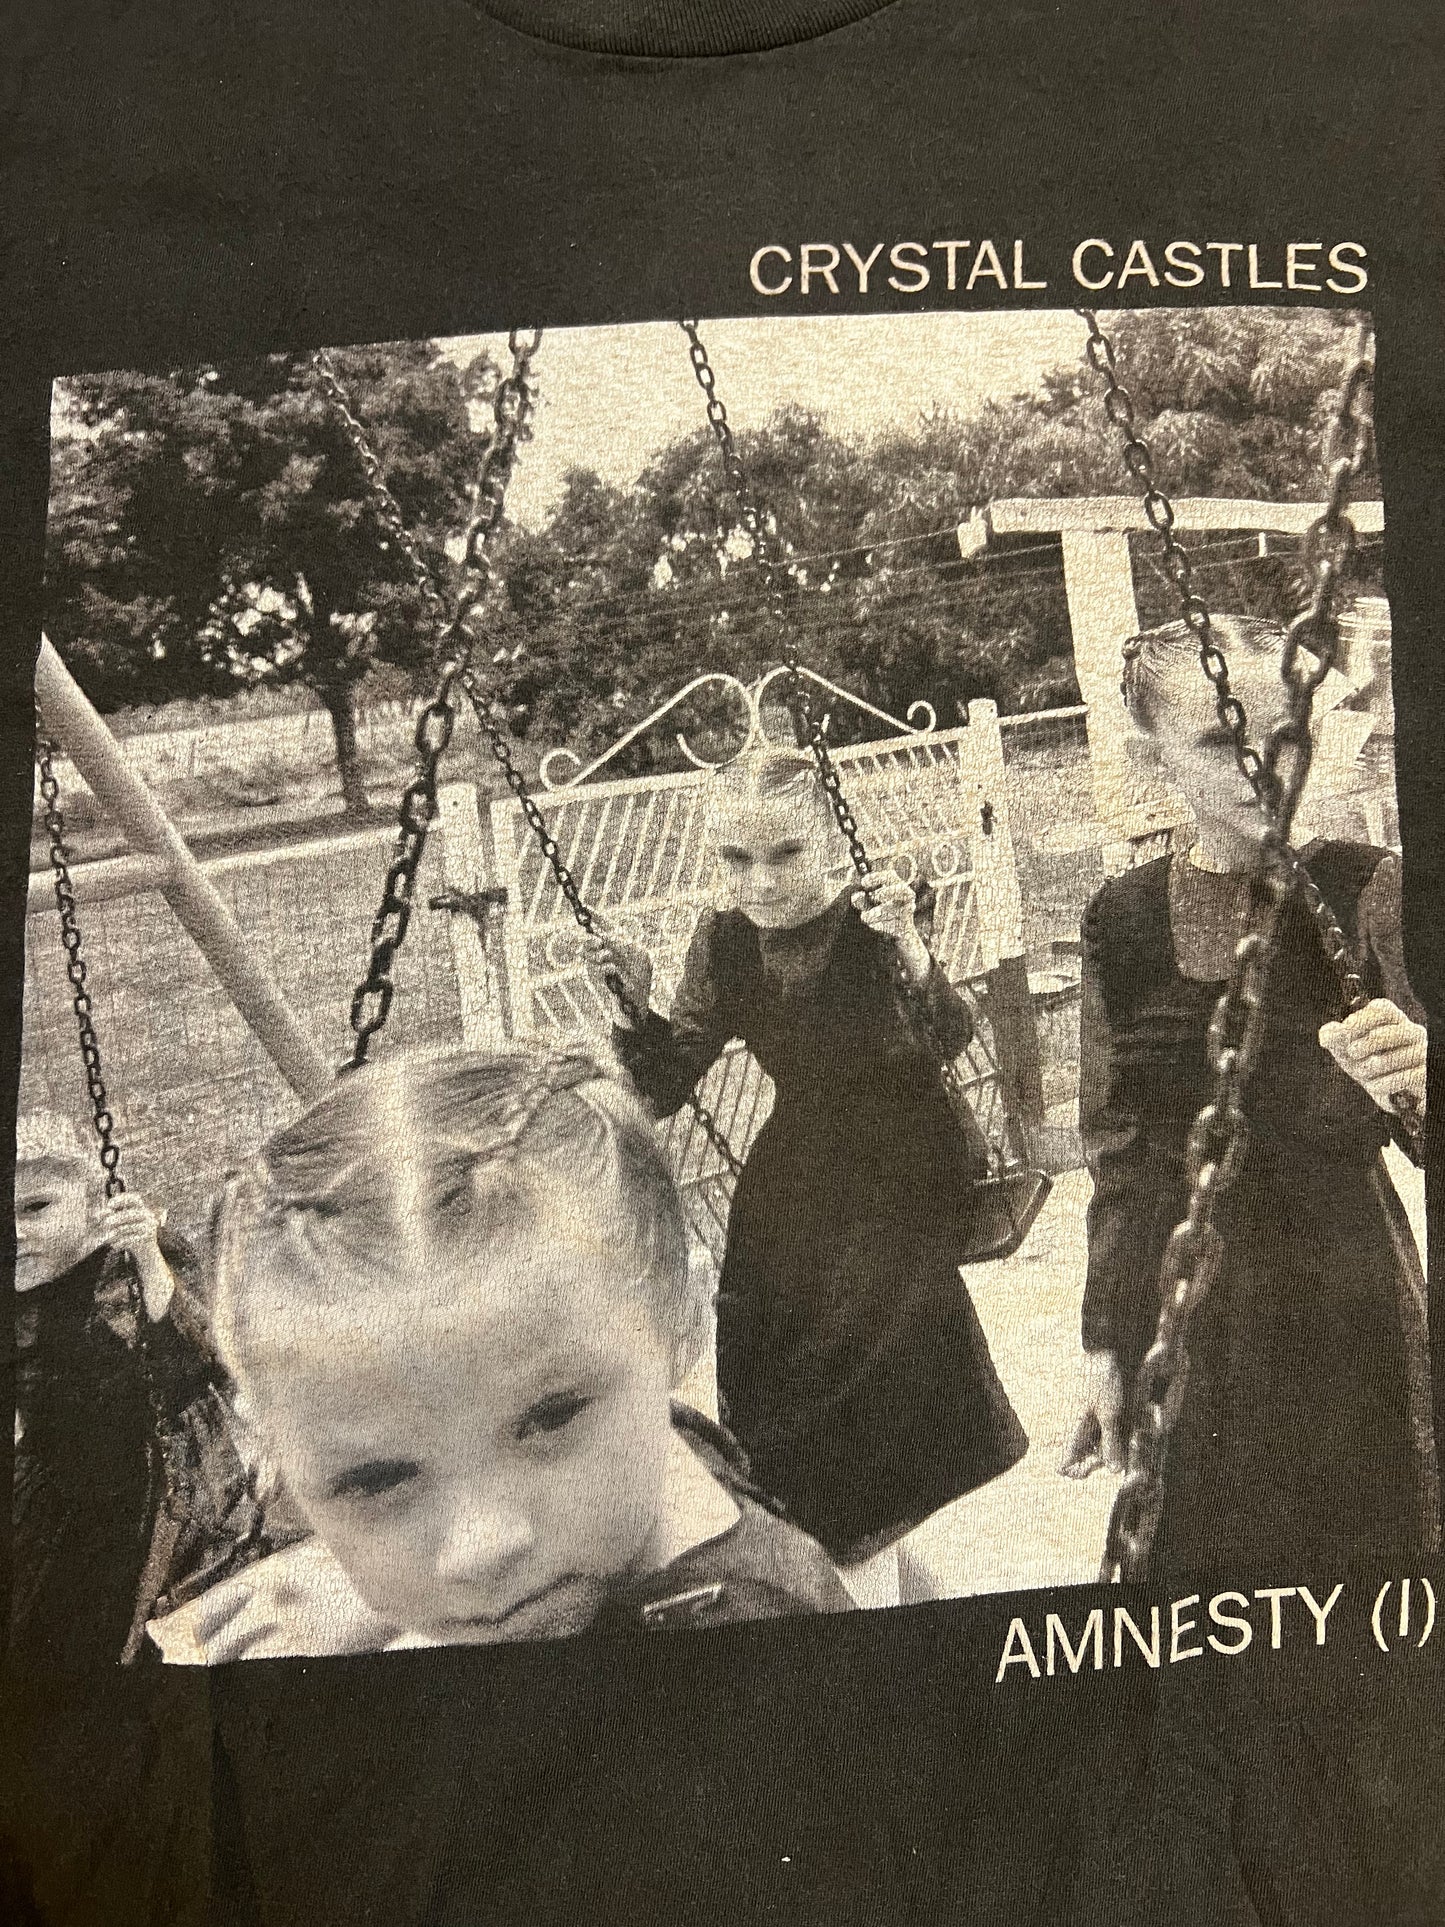 Crystal Castles Amnesty (I) T-shirt